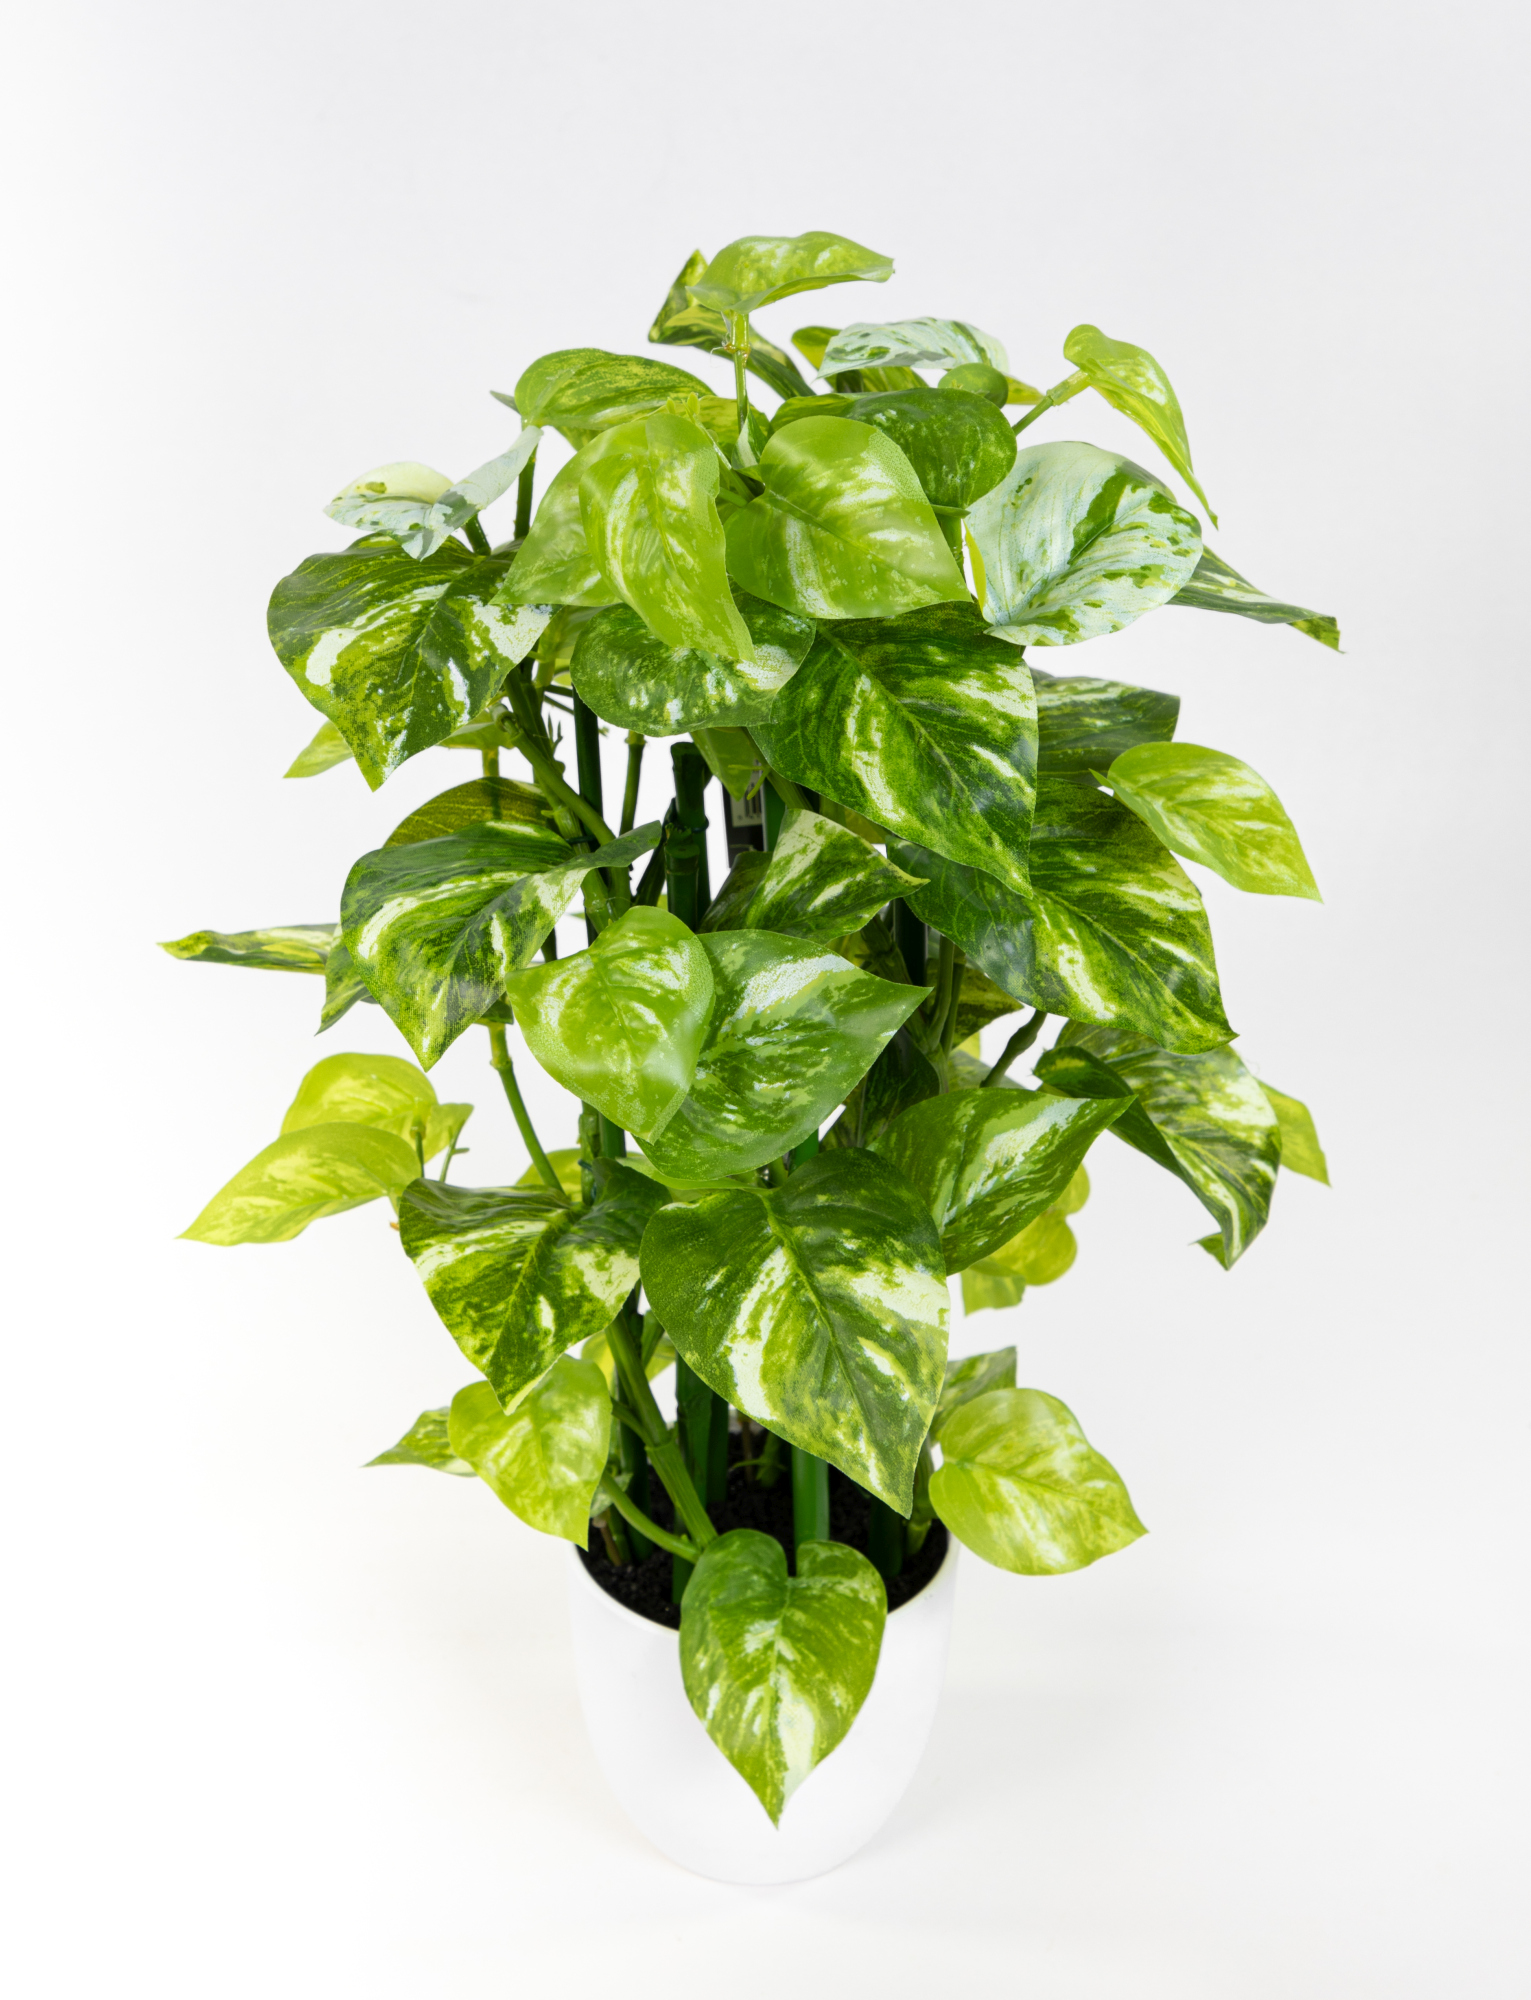 Photospflanze 40cm grün-weiß im Topf JA Kunstpflanzen Dekopflanzen künstliche Pflanzen Photos